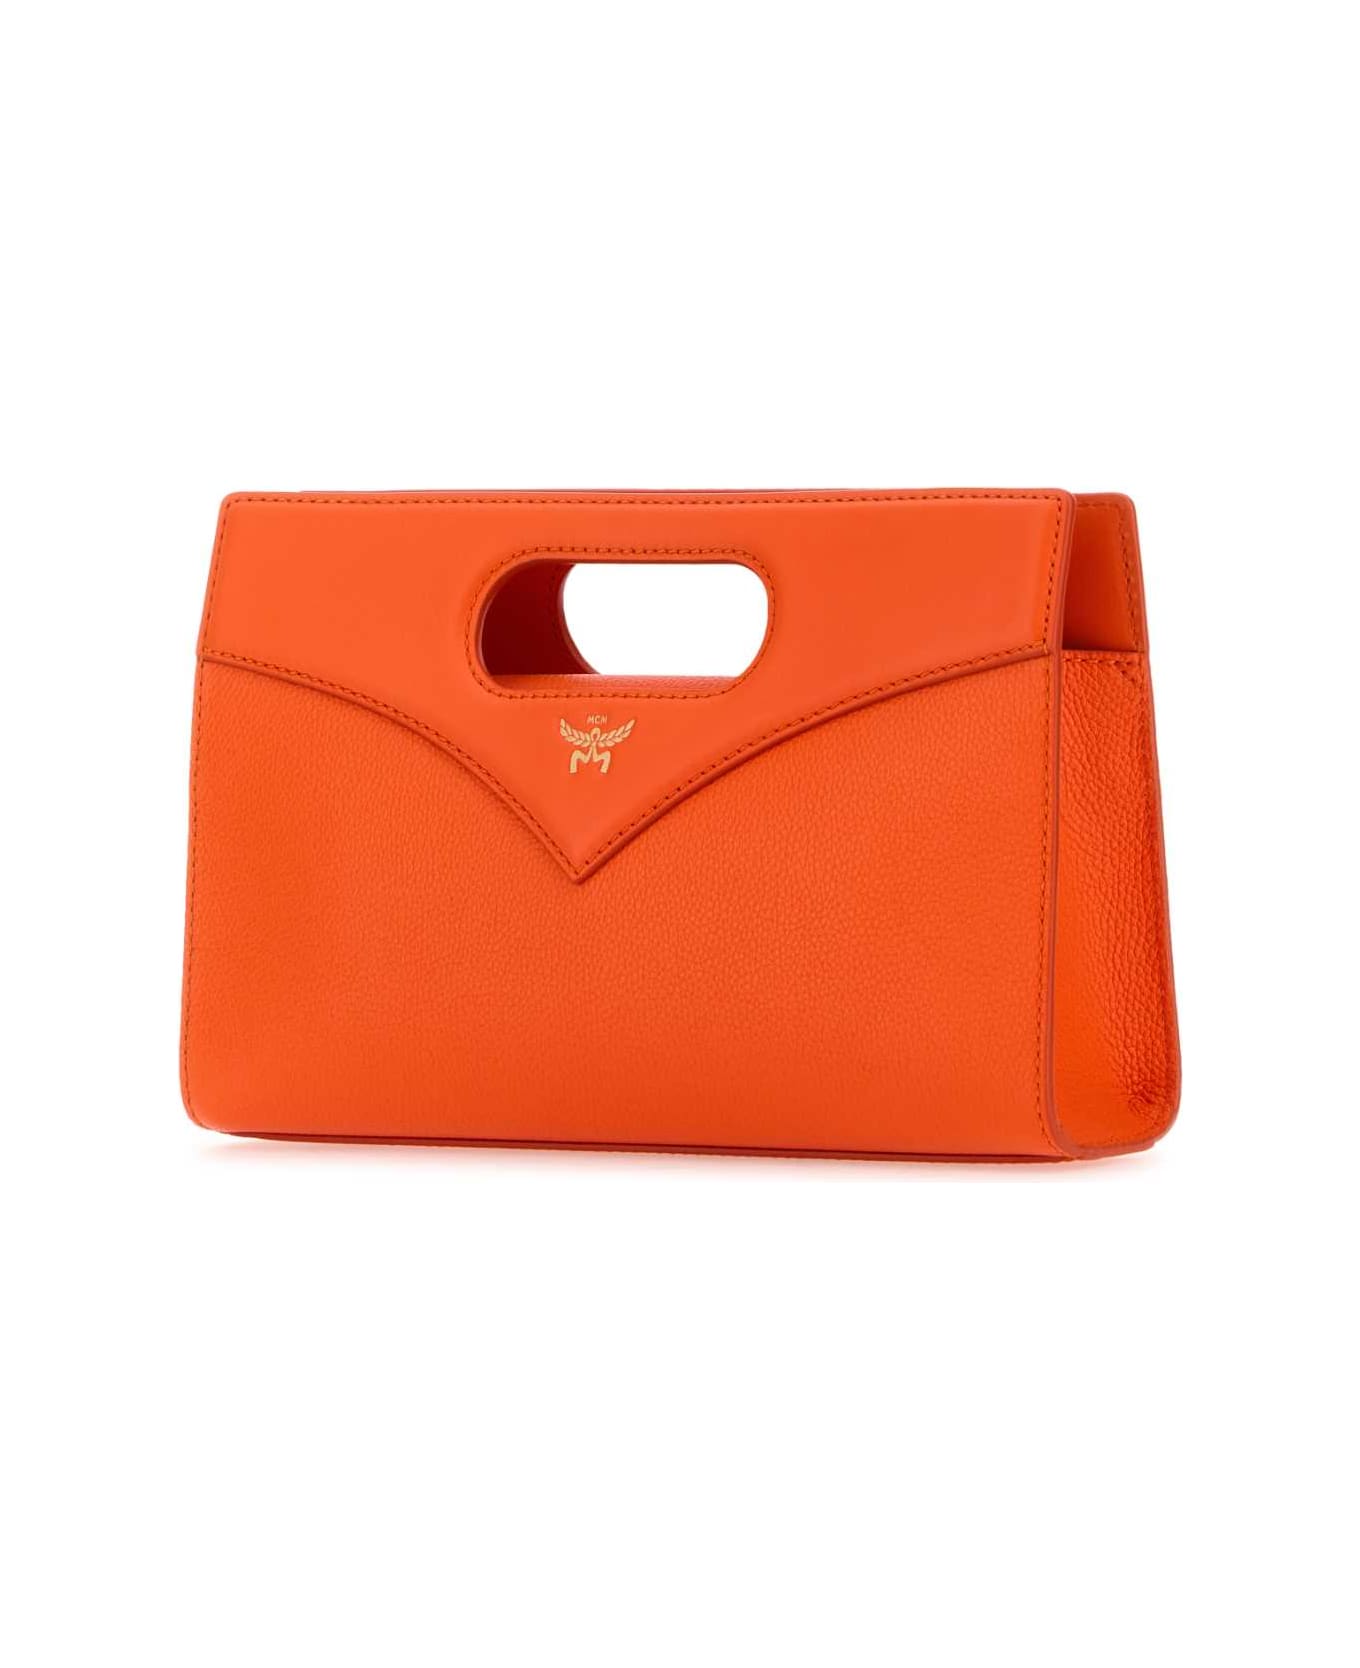 MCM Fluo Orange Leather Diamond Handbag - ORANGEADE クラッチバッグ